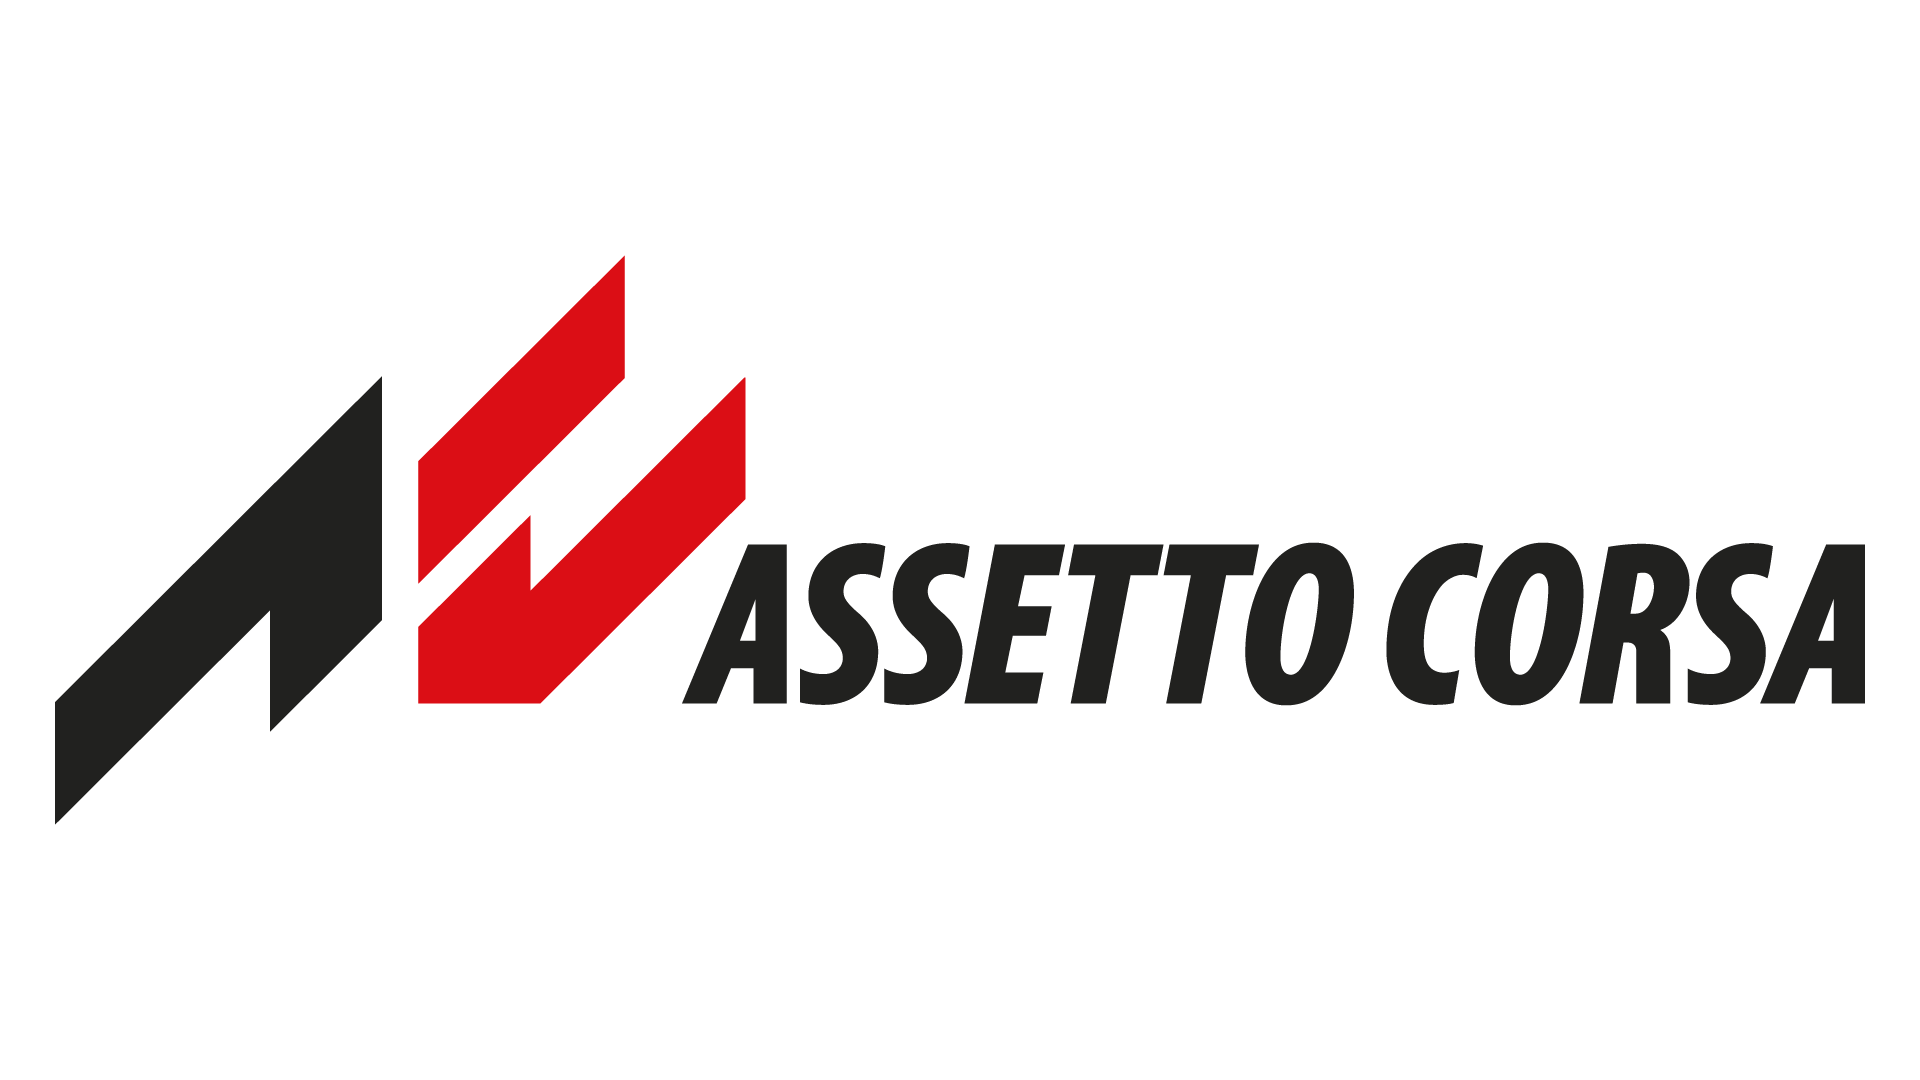 File:Assetto corsa logo.png